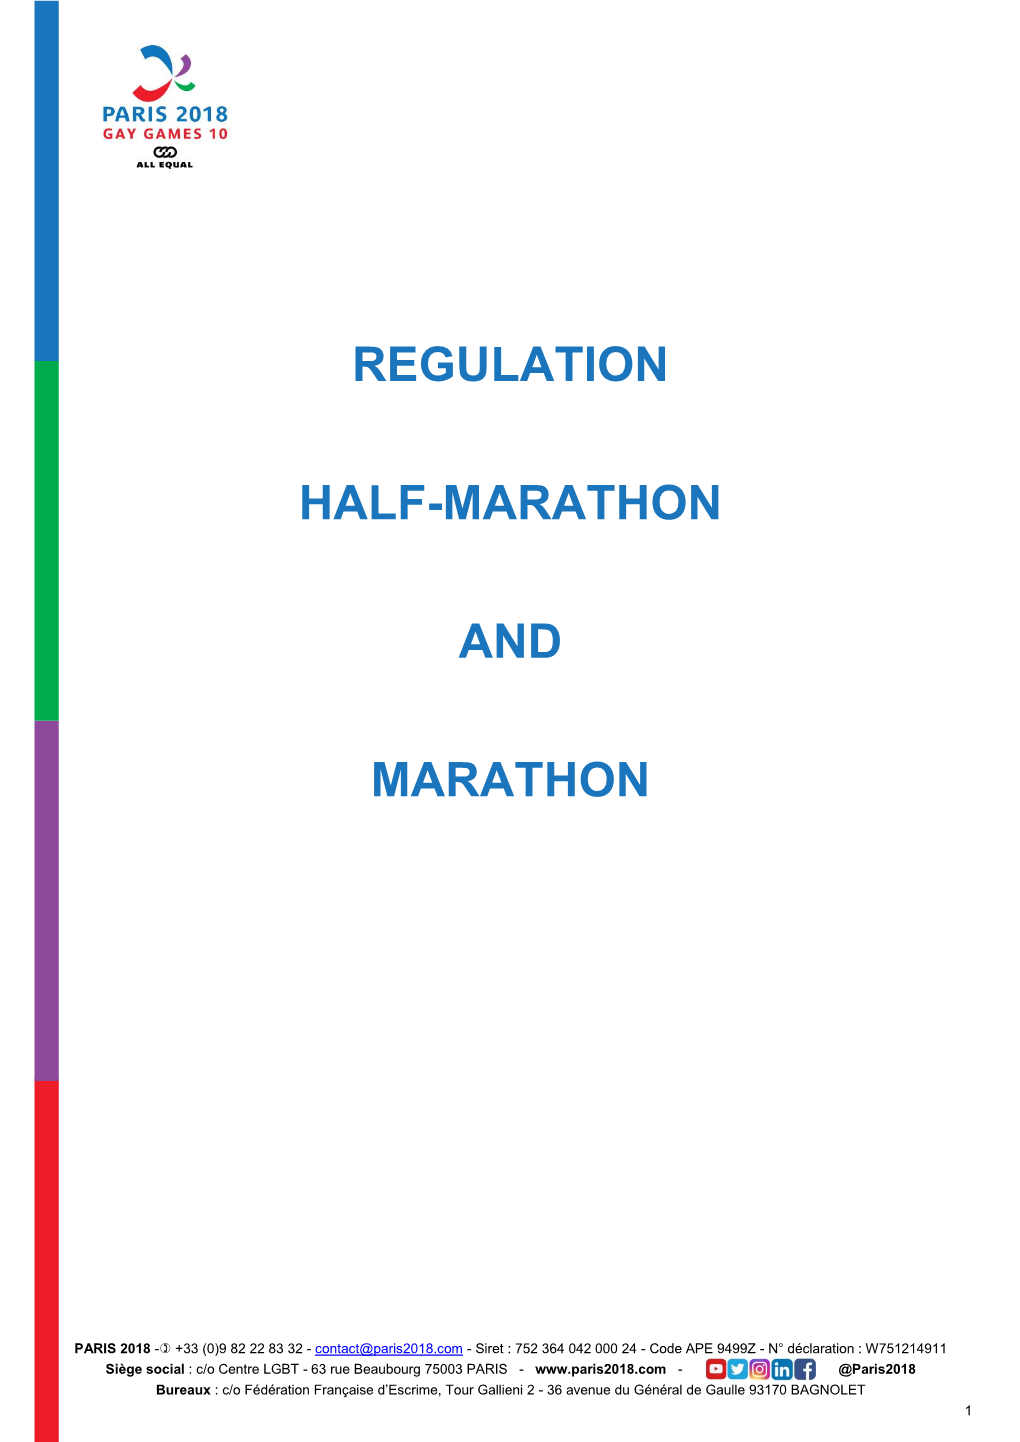 Regulation Half-Marathon and Marathon